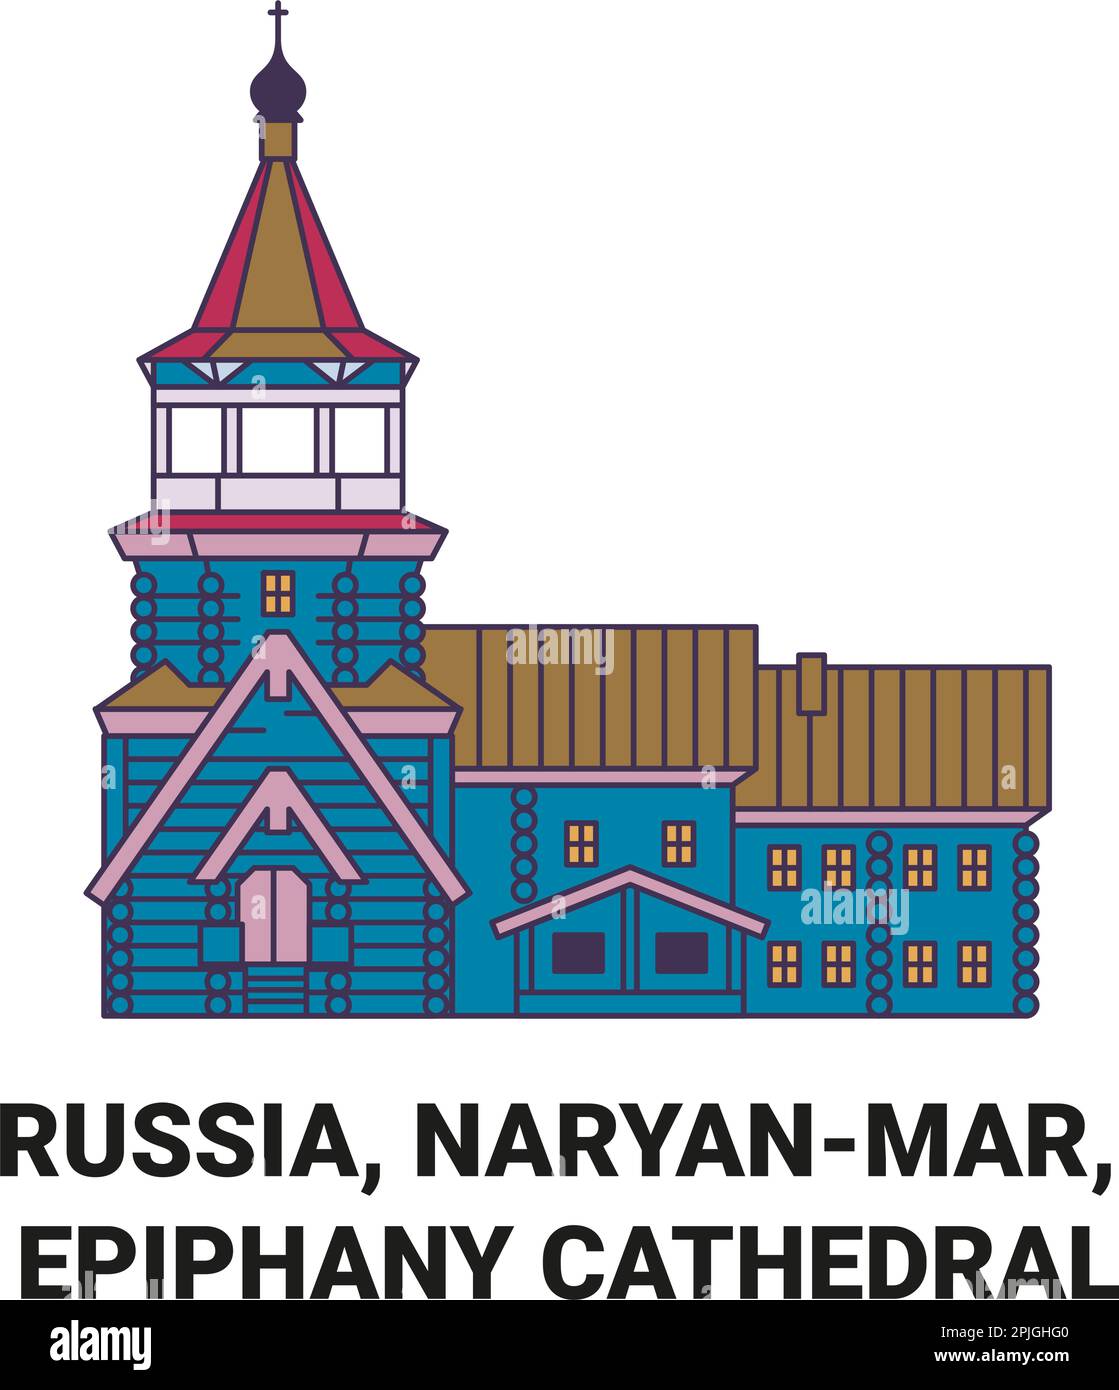 Russia, Naryanmar, Epiphany Cathedral travel landmark vector illustration Stock Vector